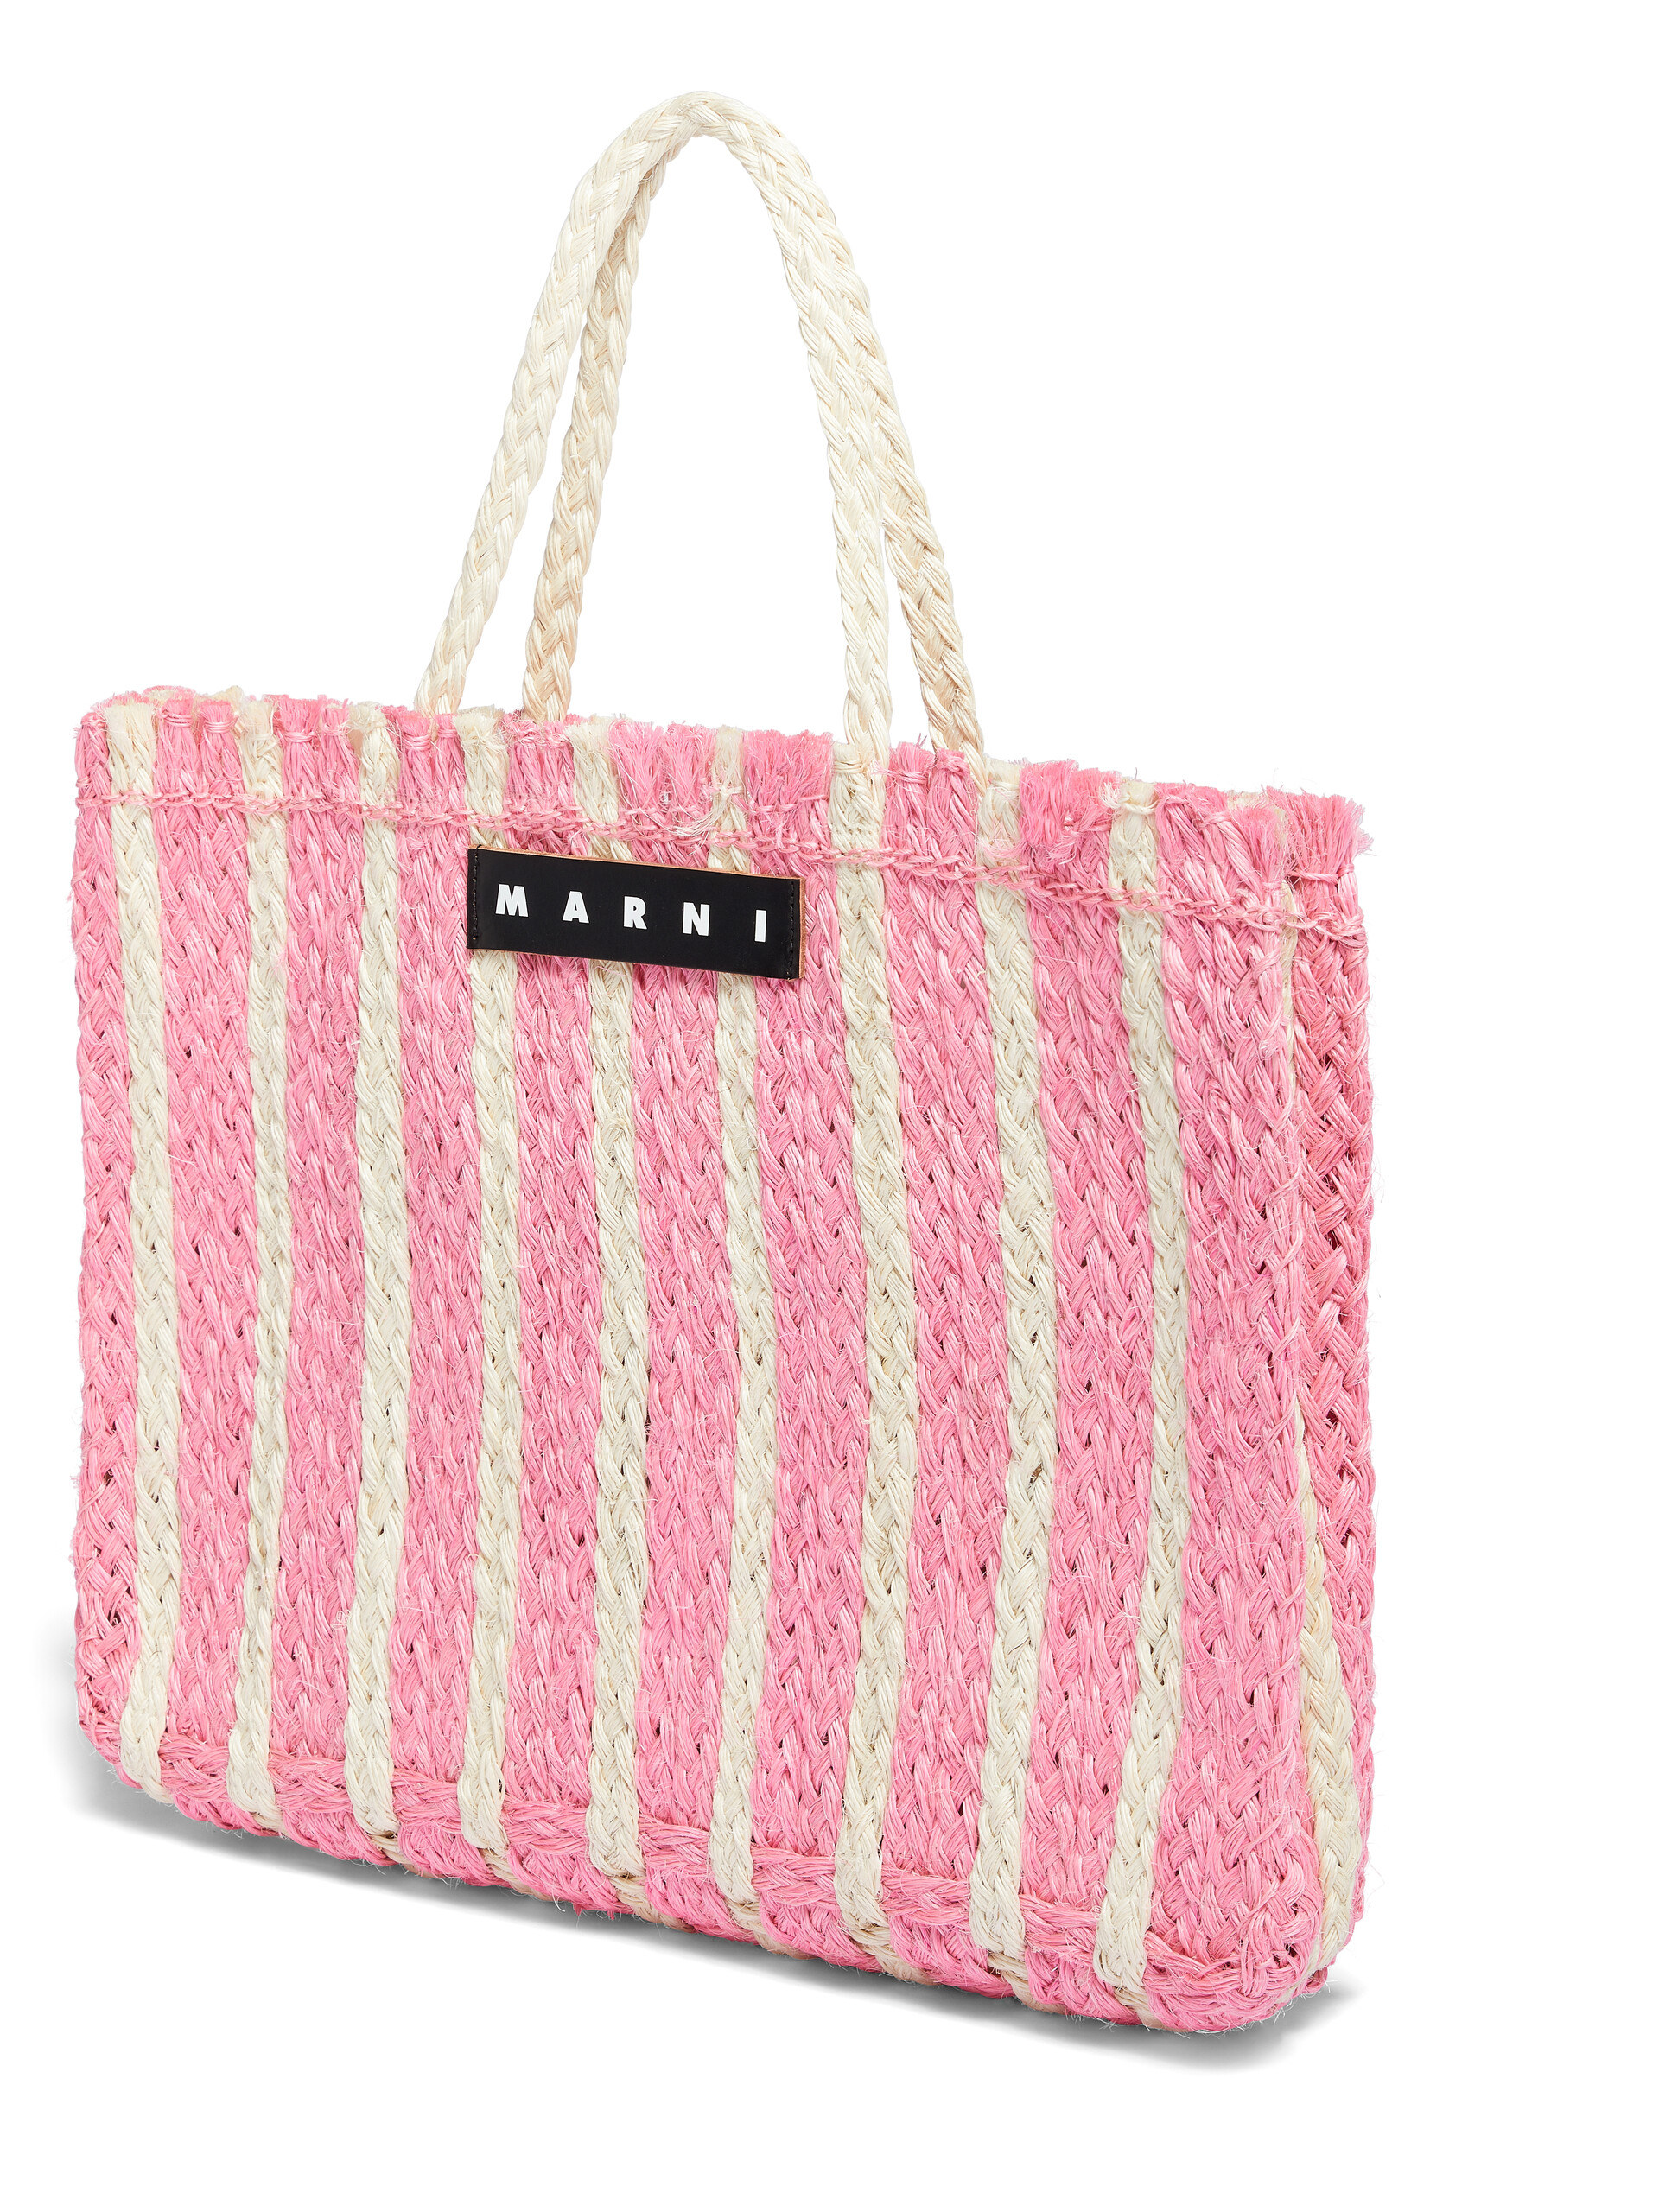 MARNI MARKET bag in pink natural fiber - Bags - Image 4